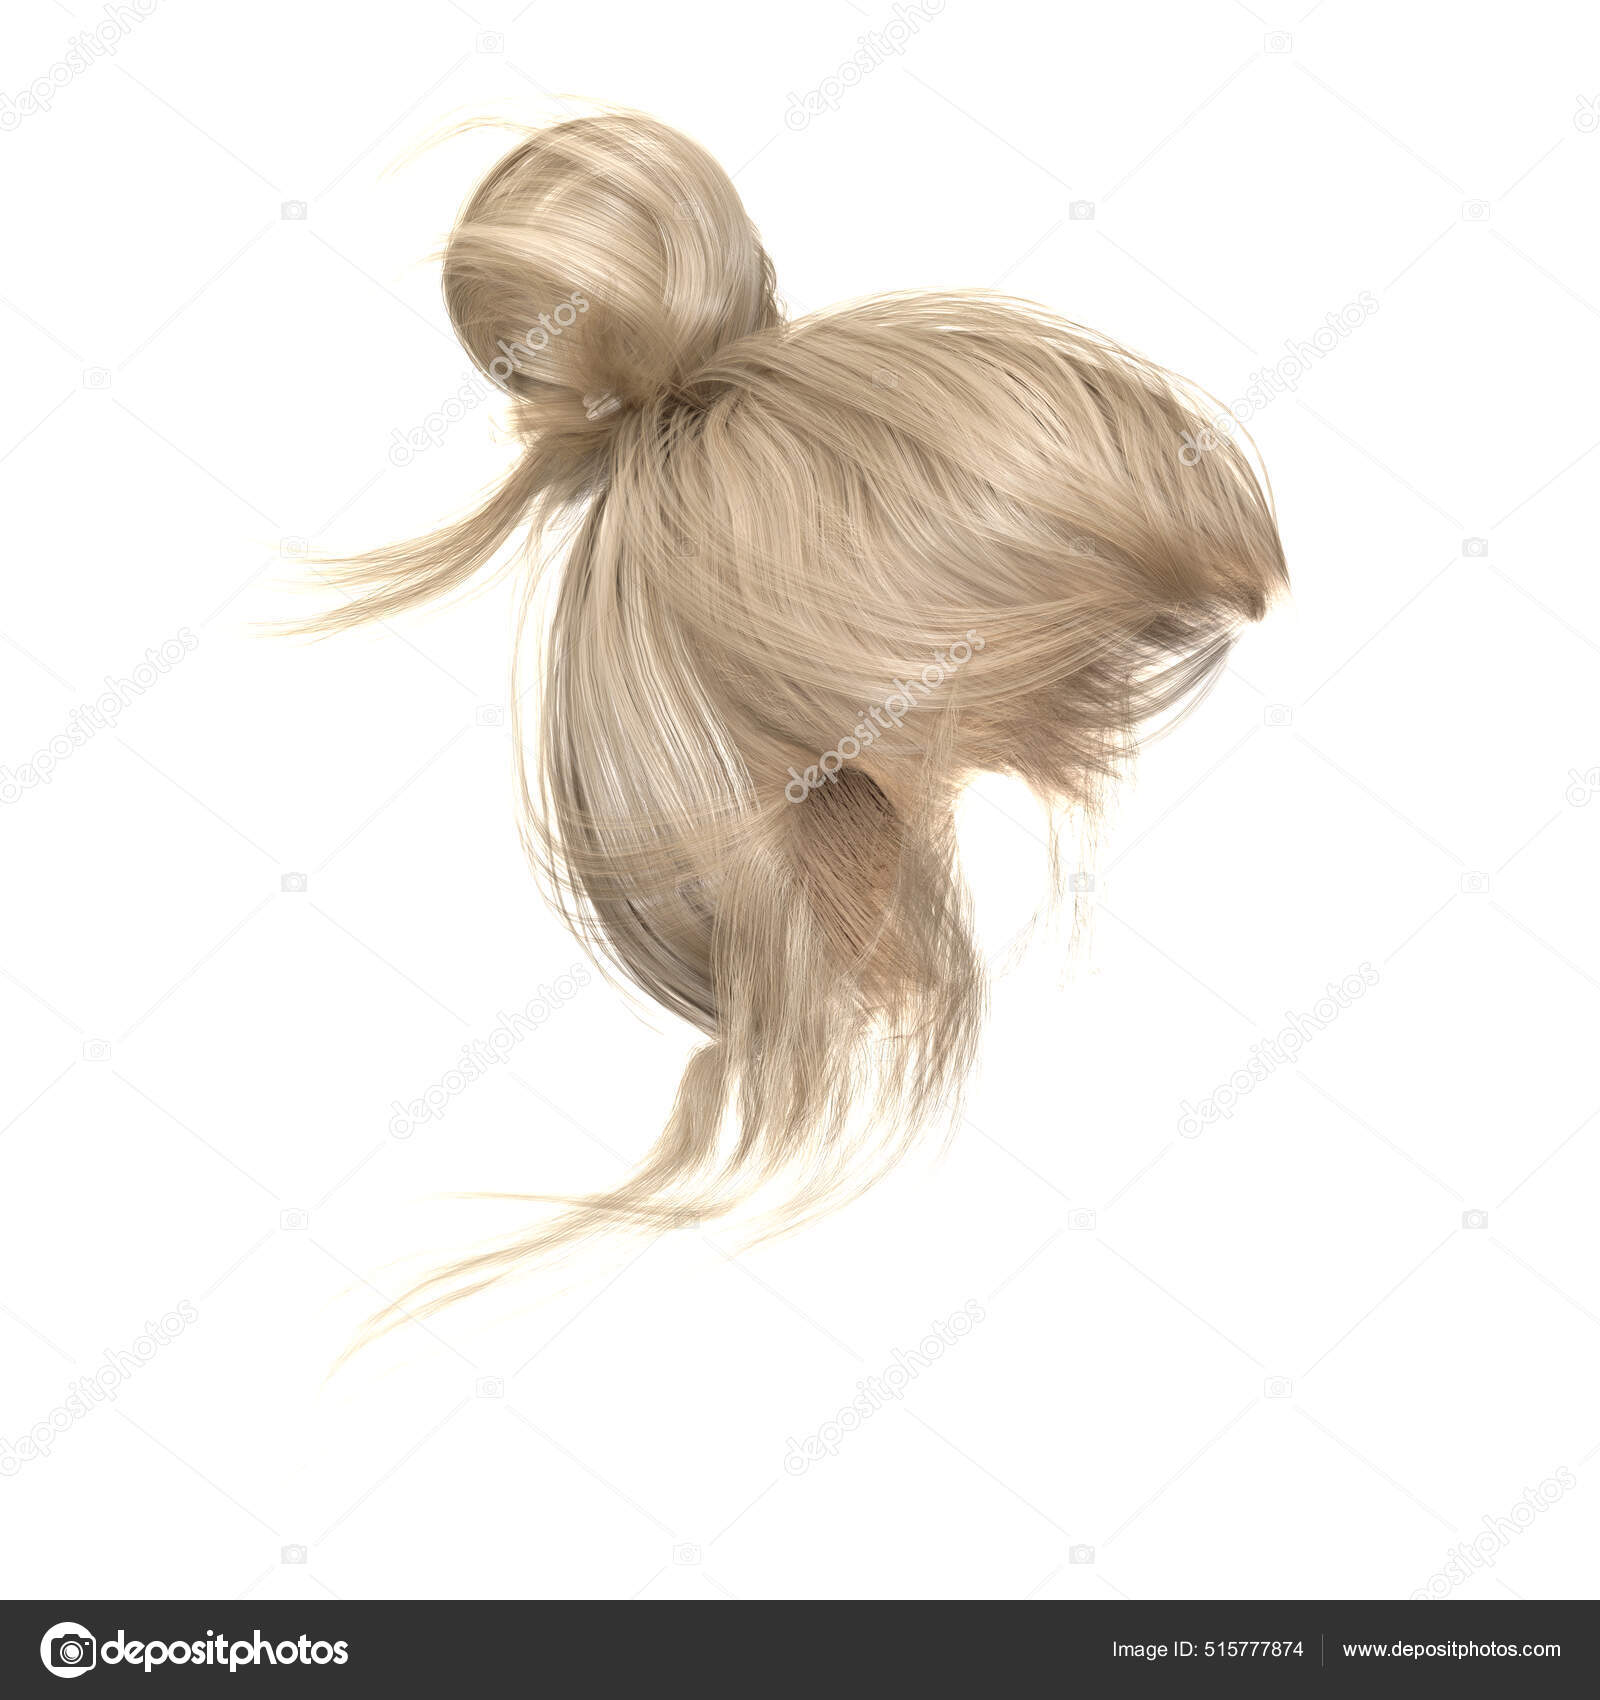 Messy hair bun Stock Photos, Royalty Free Messy hair bun Images |  Depositphotos